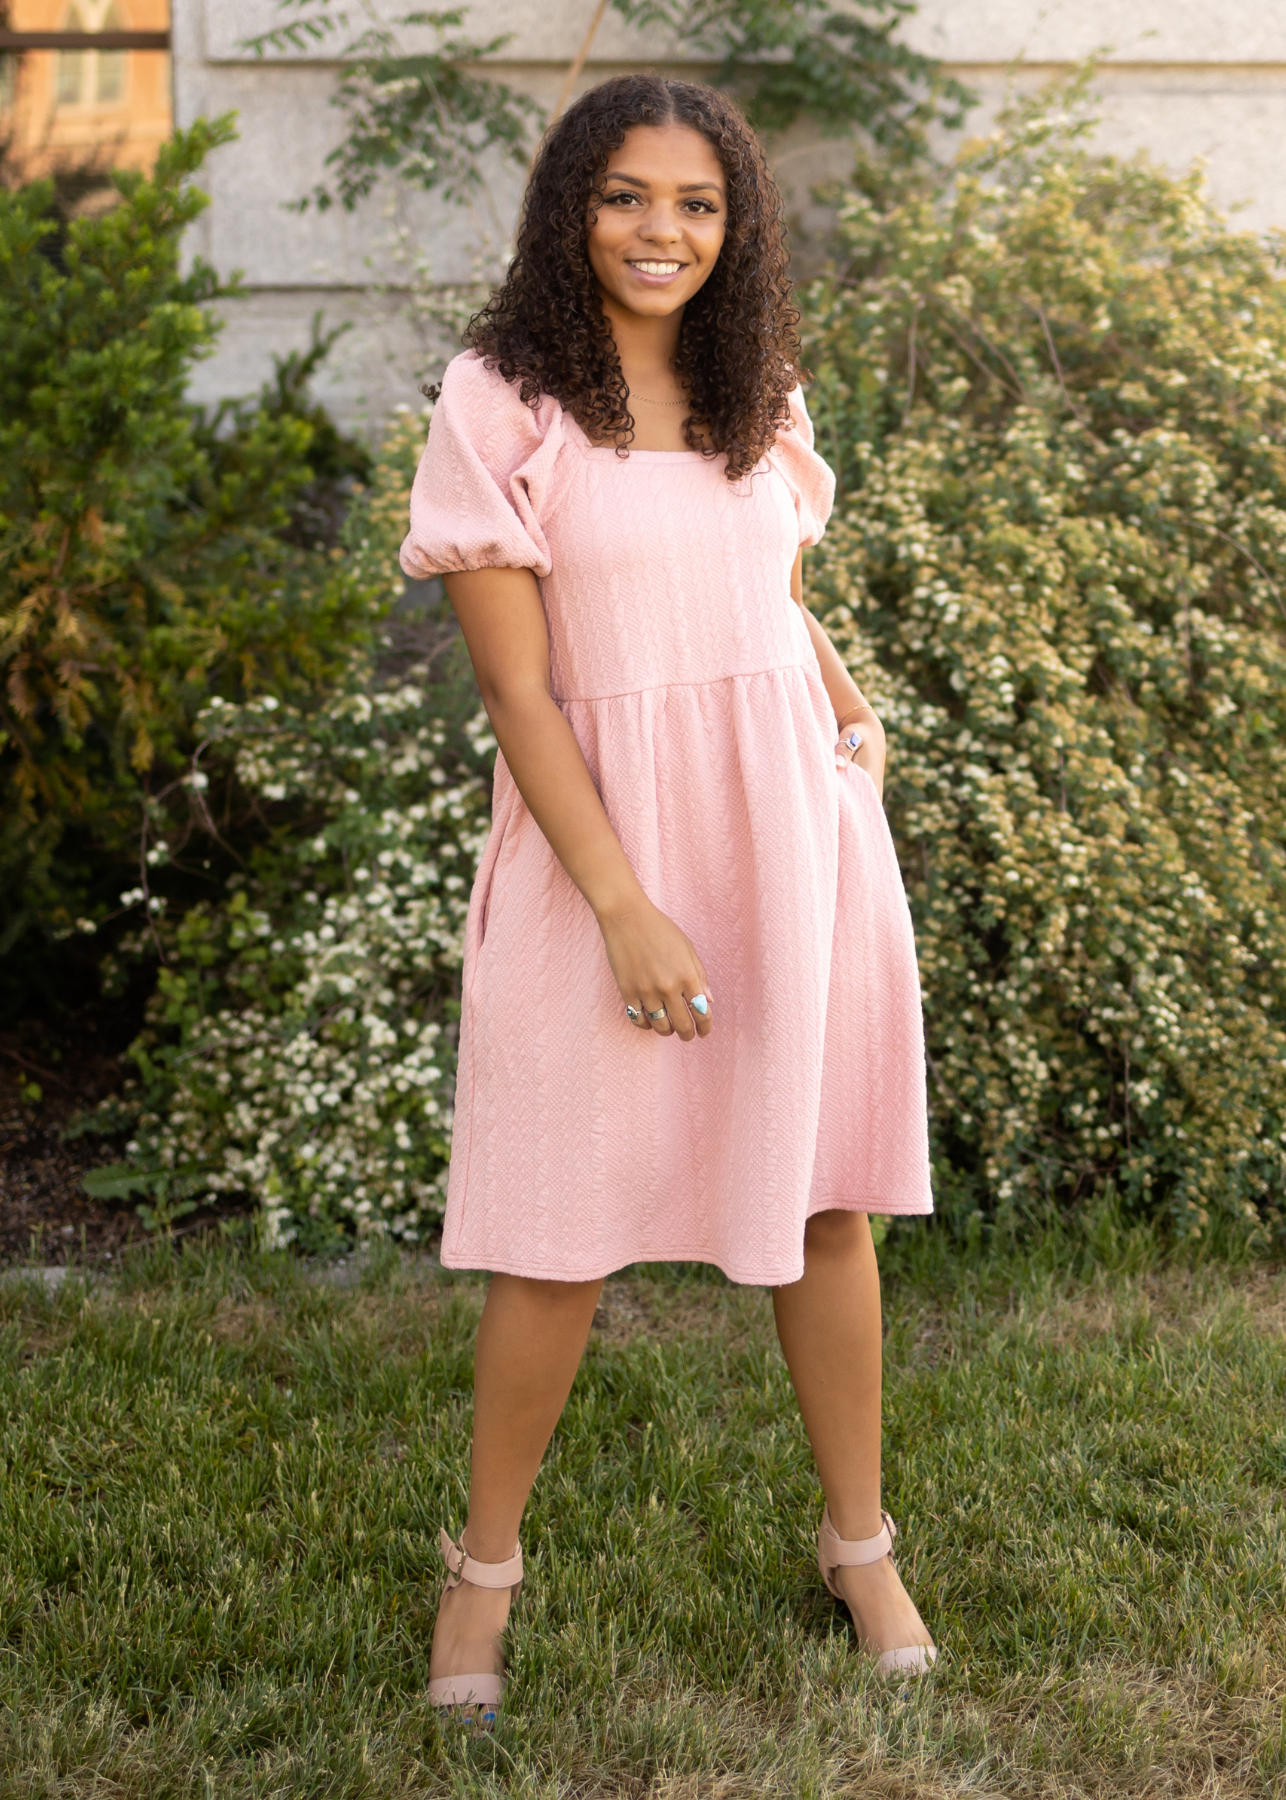 Short sleeve dusty pink knee length dress